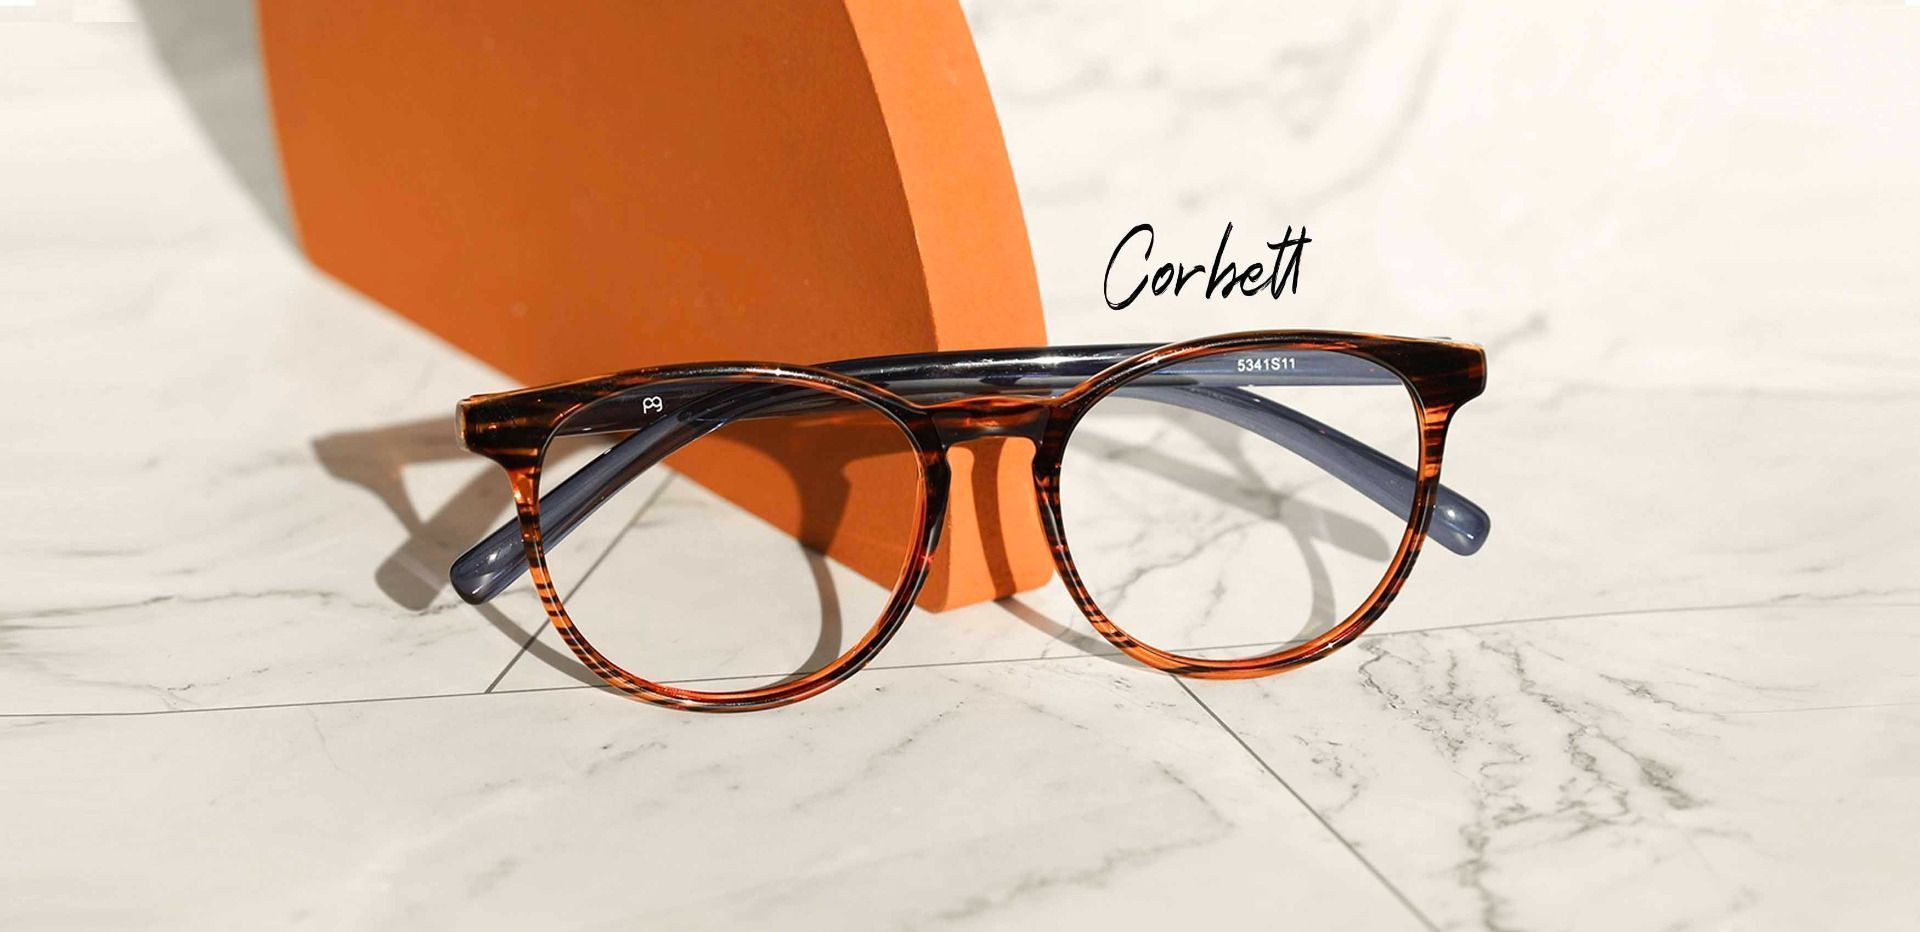 Corbett Oval Progressive Glasses - Striped